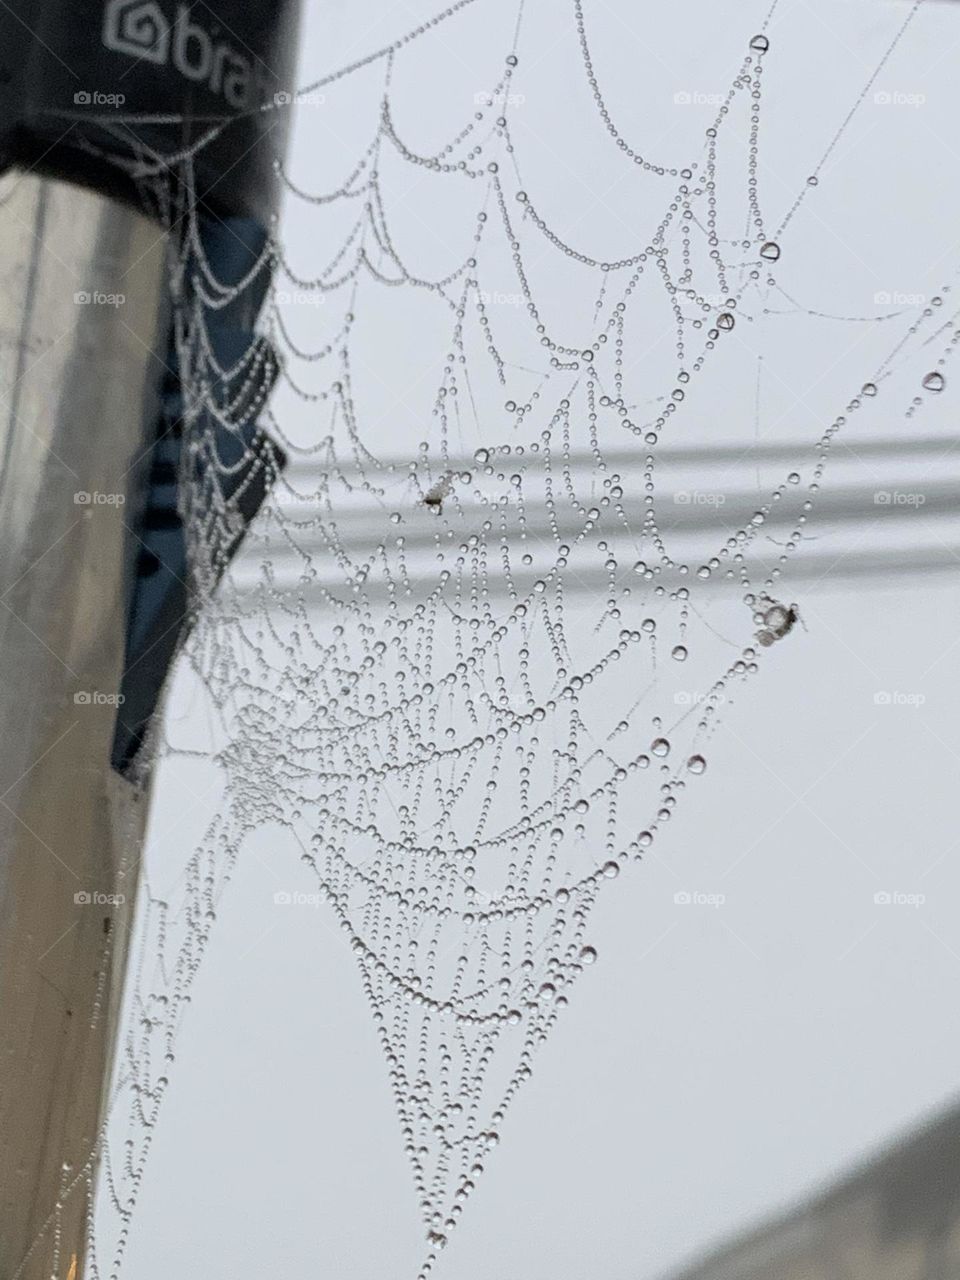 Spiderweb on a rainy day